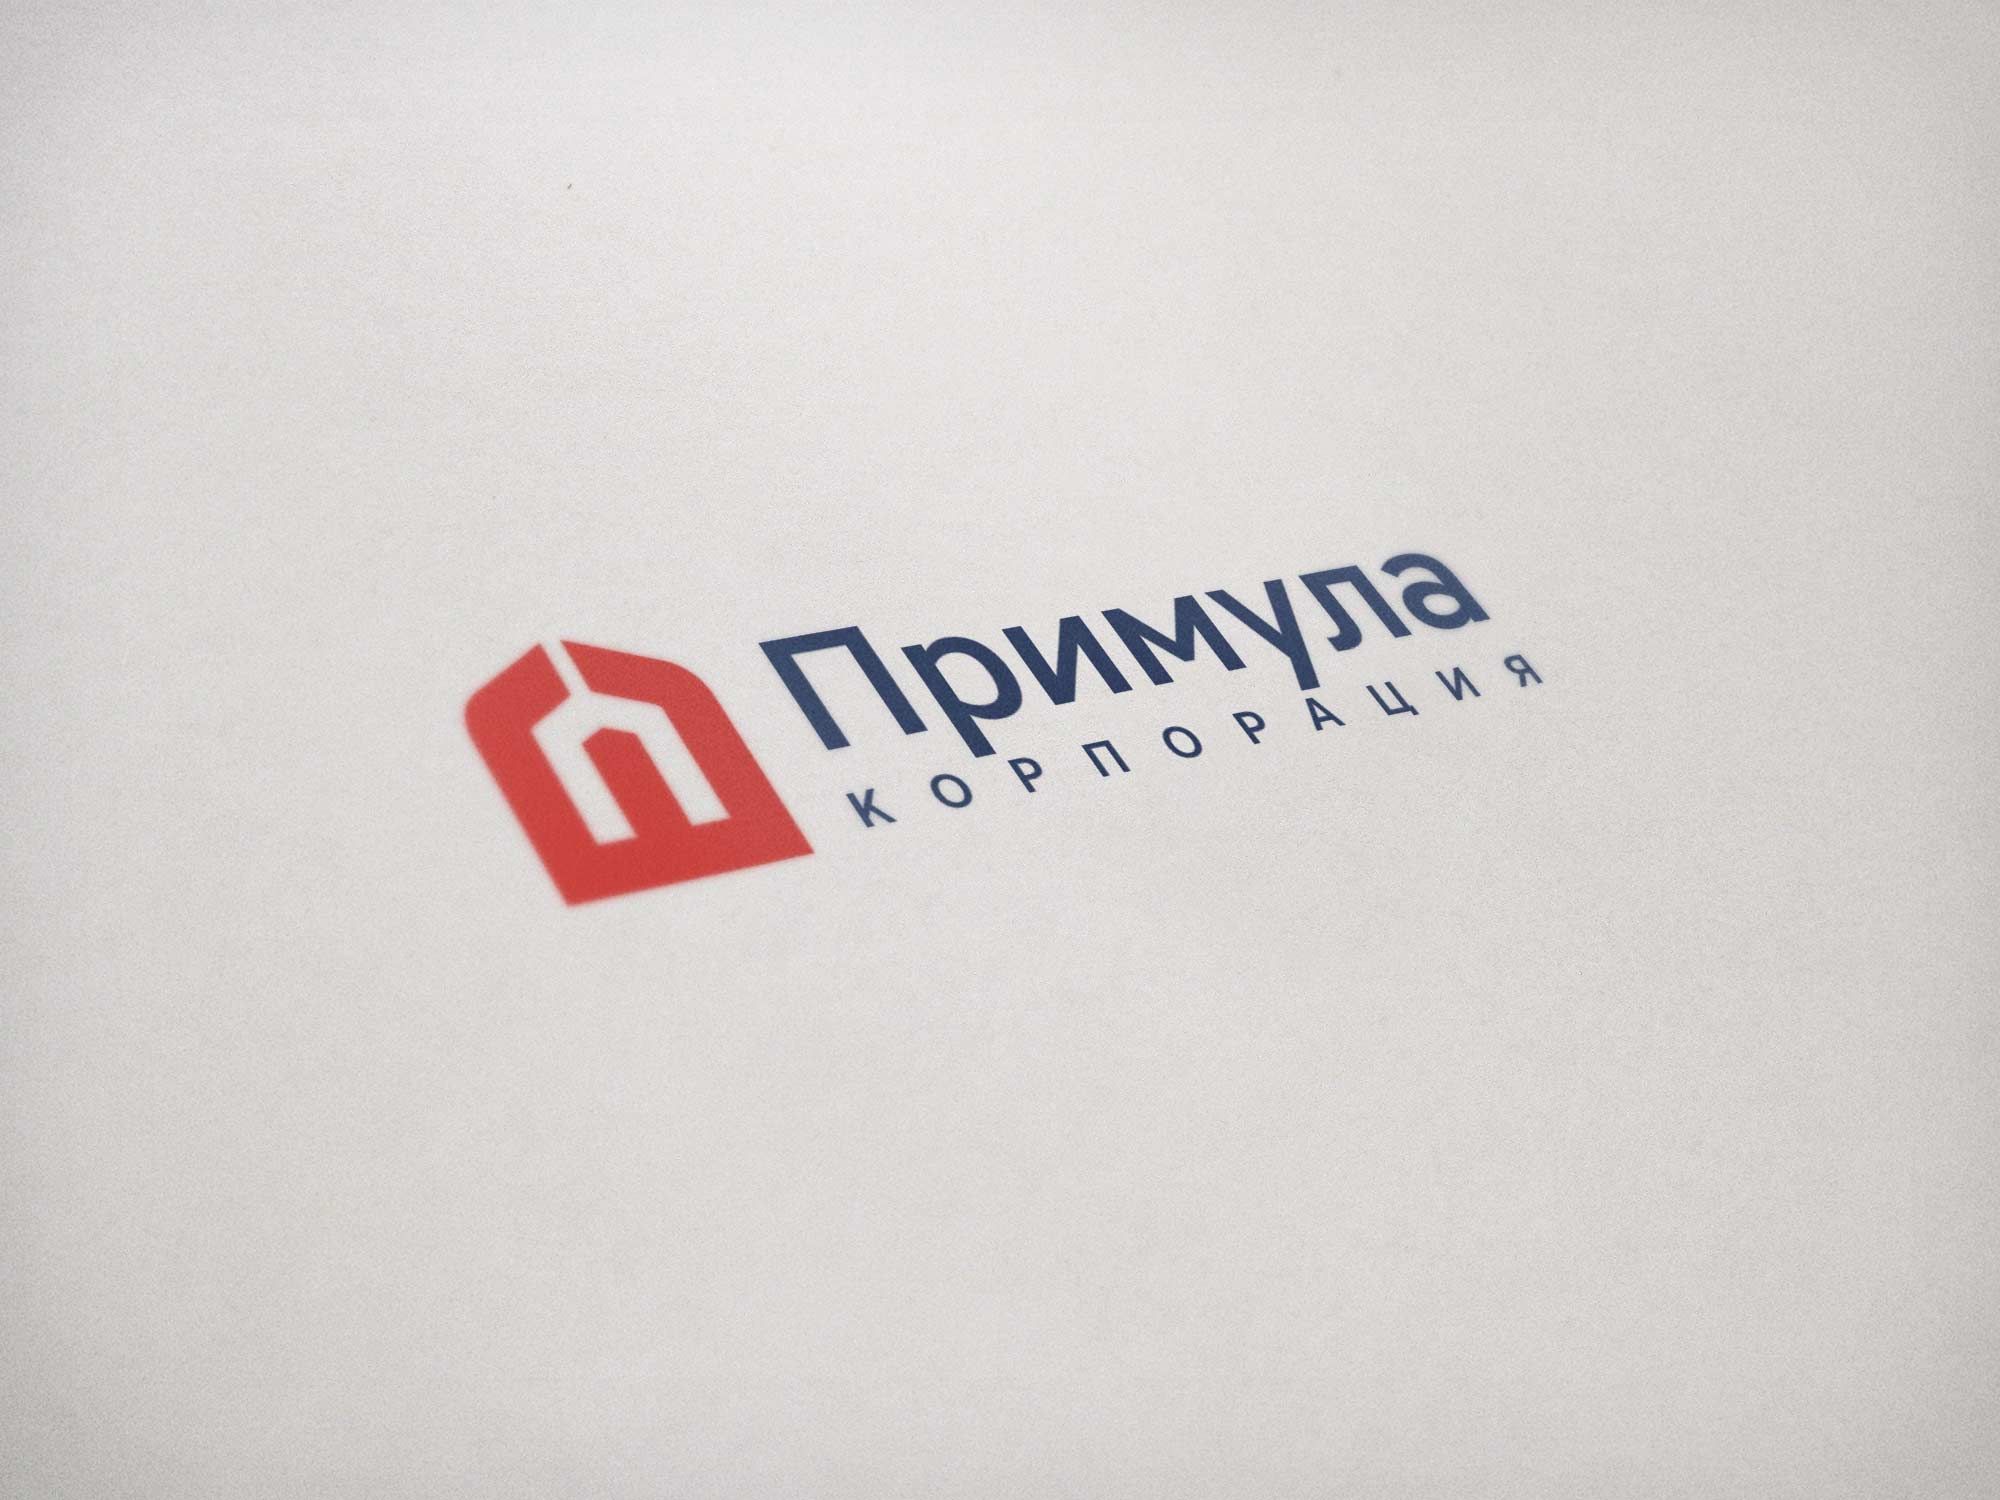 Логотип для группы компаний - дизайнер vadimsoloviev